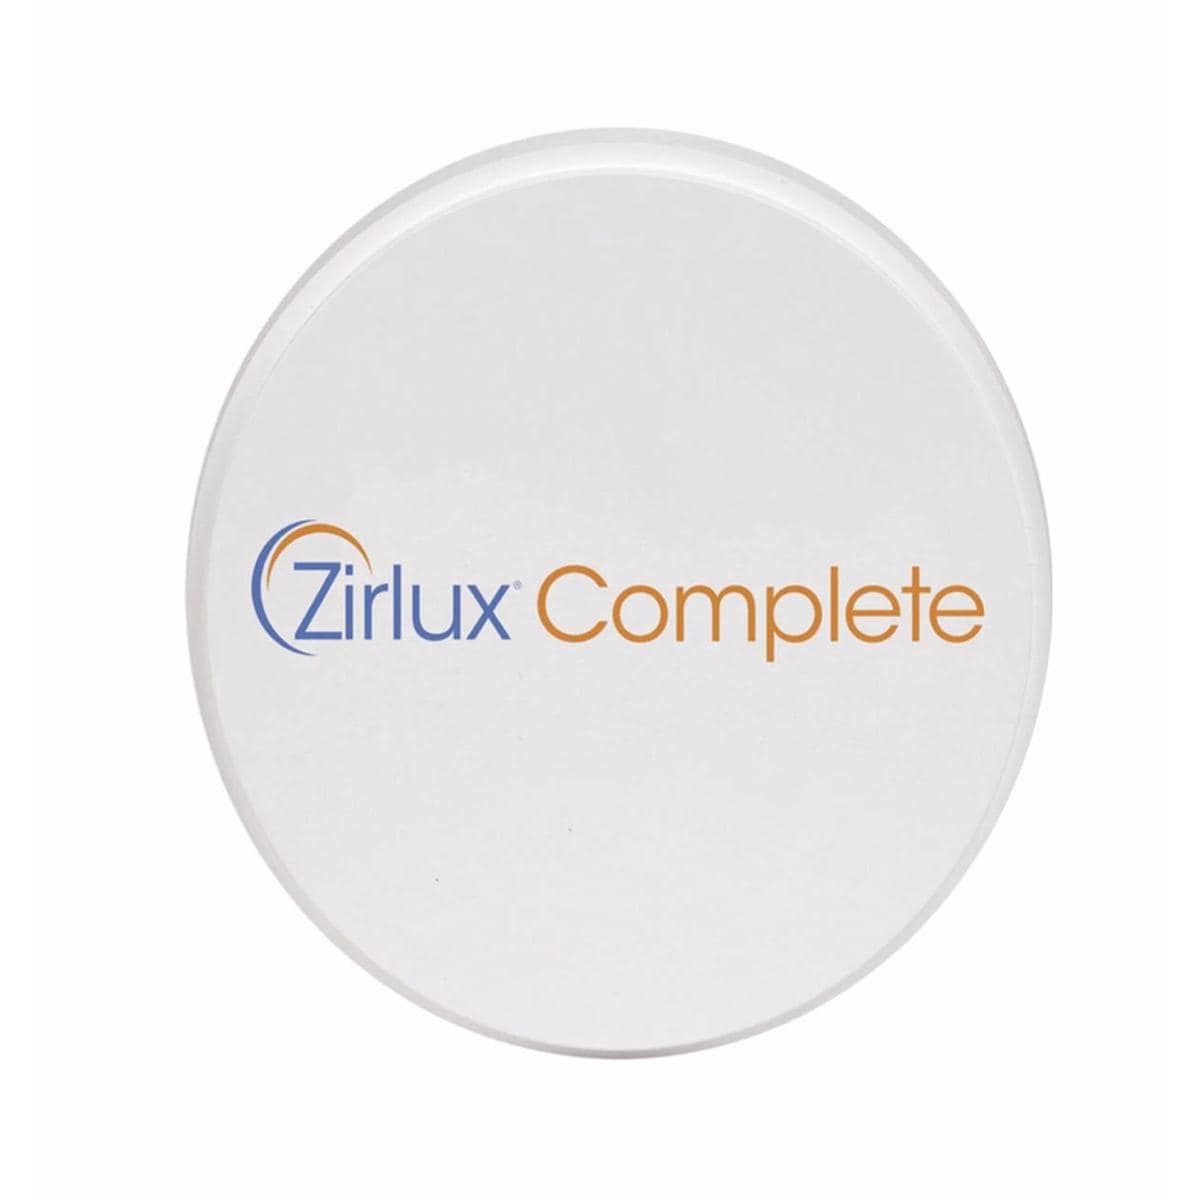 Zirlux Complete A3 98.5x18mm